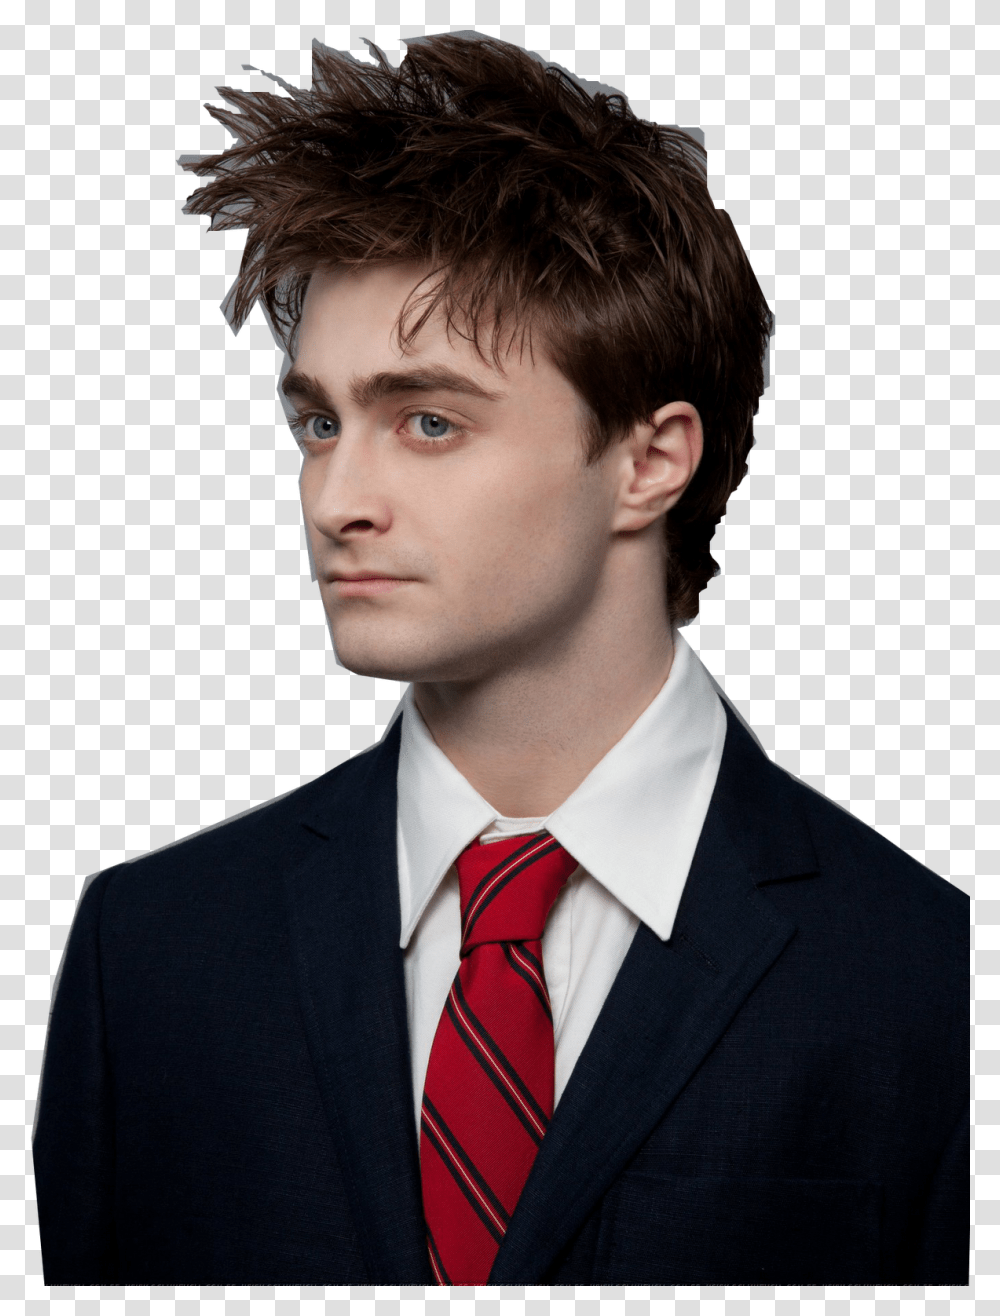 Channing Tatum Harry Potter Boy Haircuts, Tie, Accessories, Accessory, Suit Transparent Png